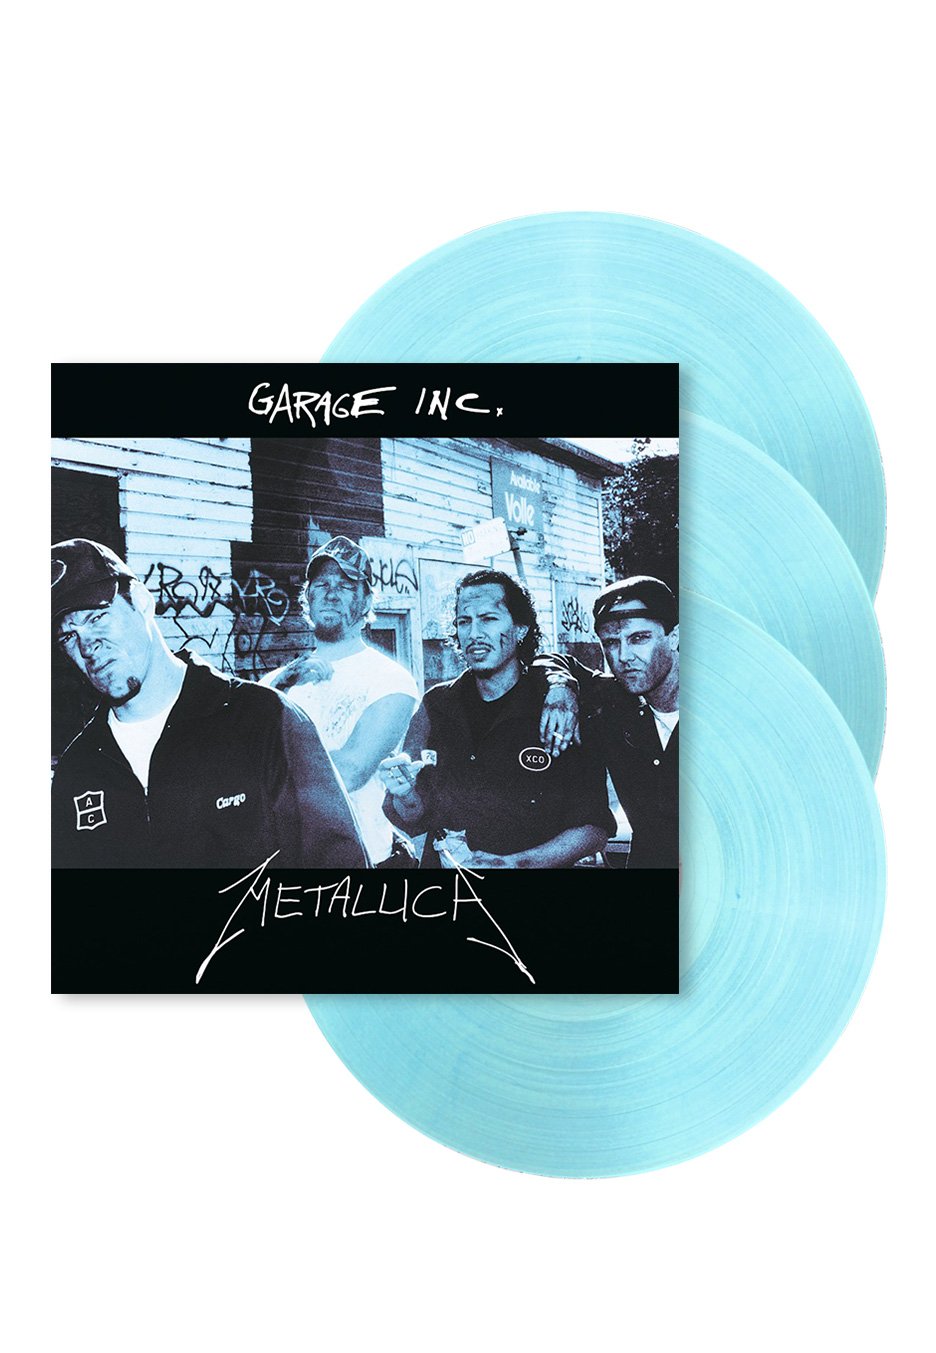 Metallica - Garage Inc. Clear Blue Ltd. - Colored 3 Vinyl